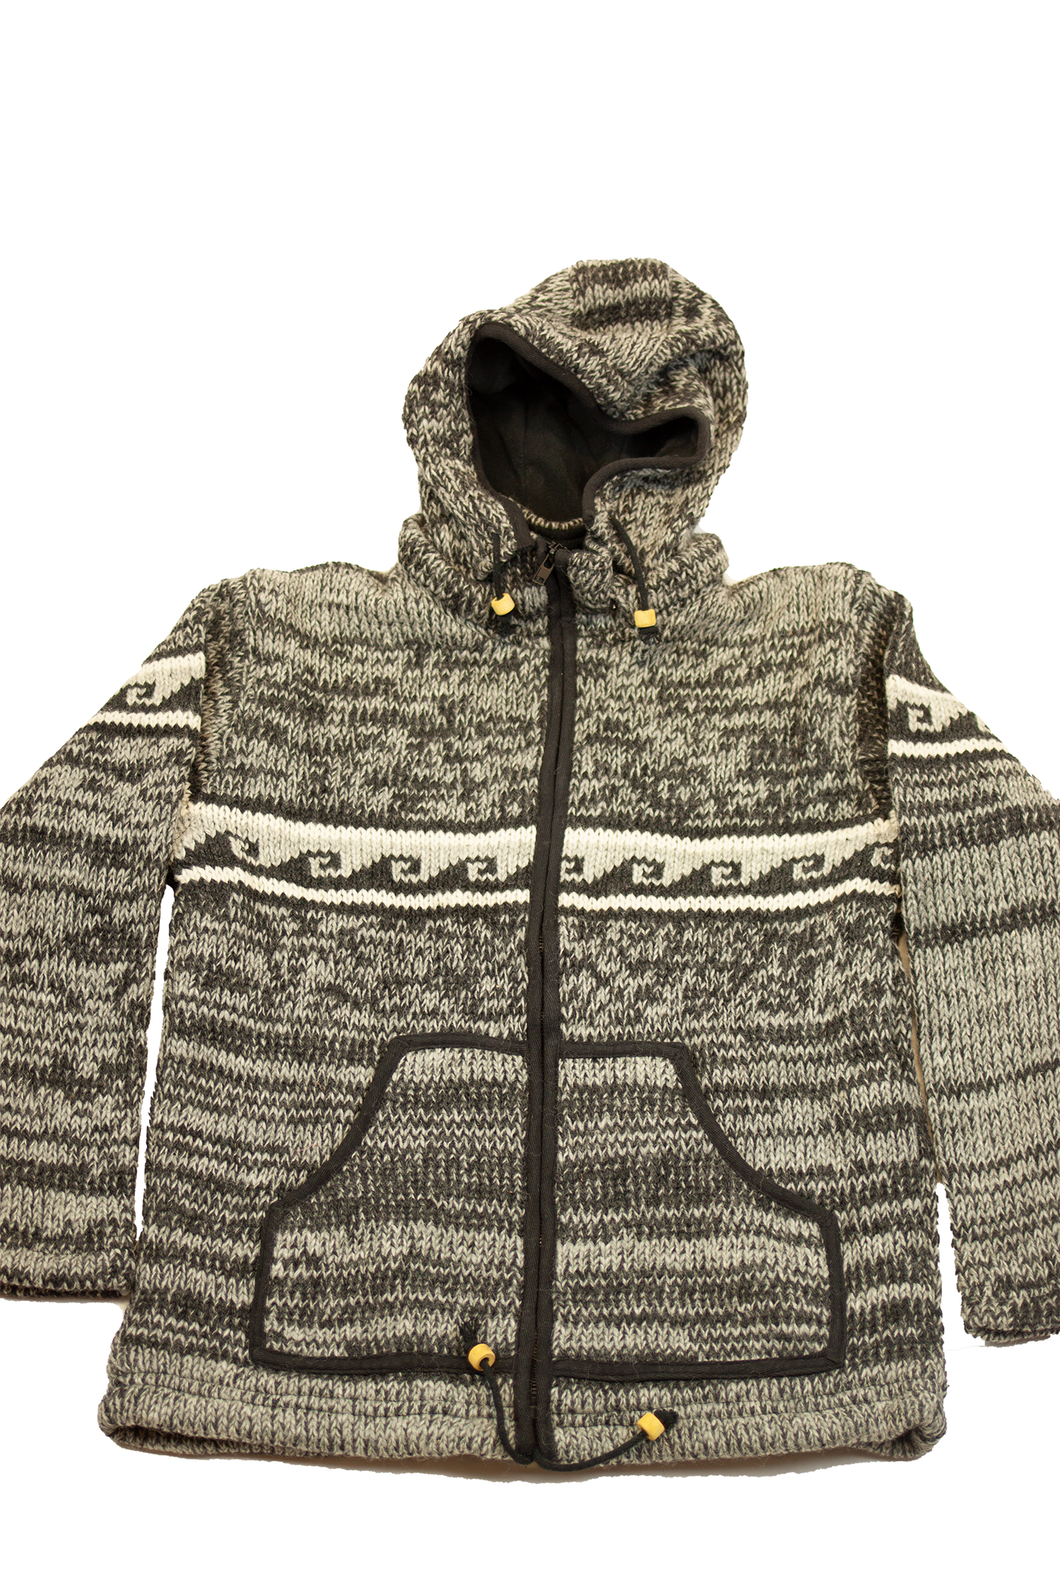 Hand knitted woolen jacket/sweater with soft inner fleece - HMPWJ1